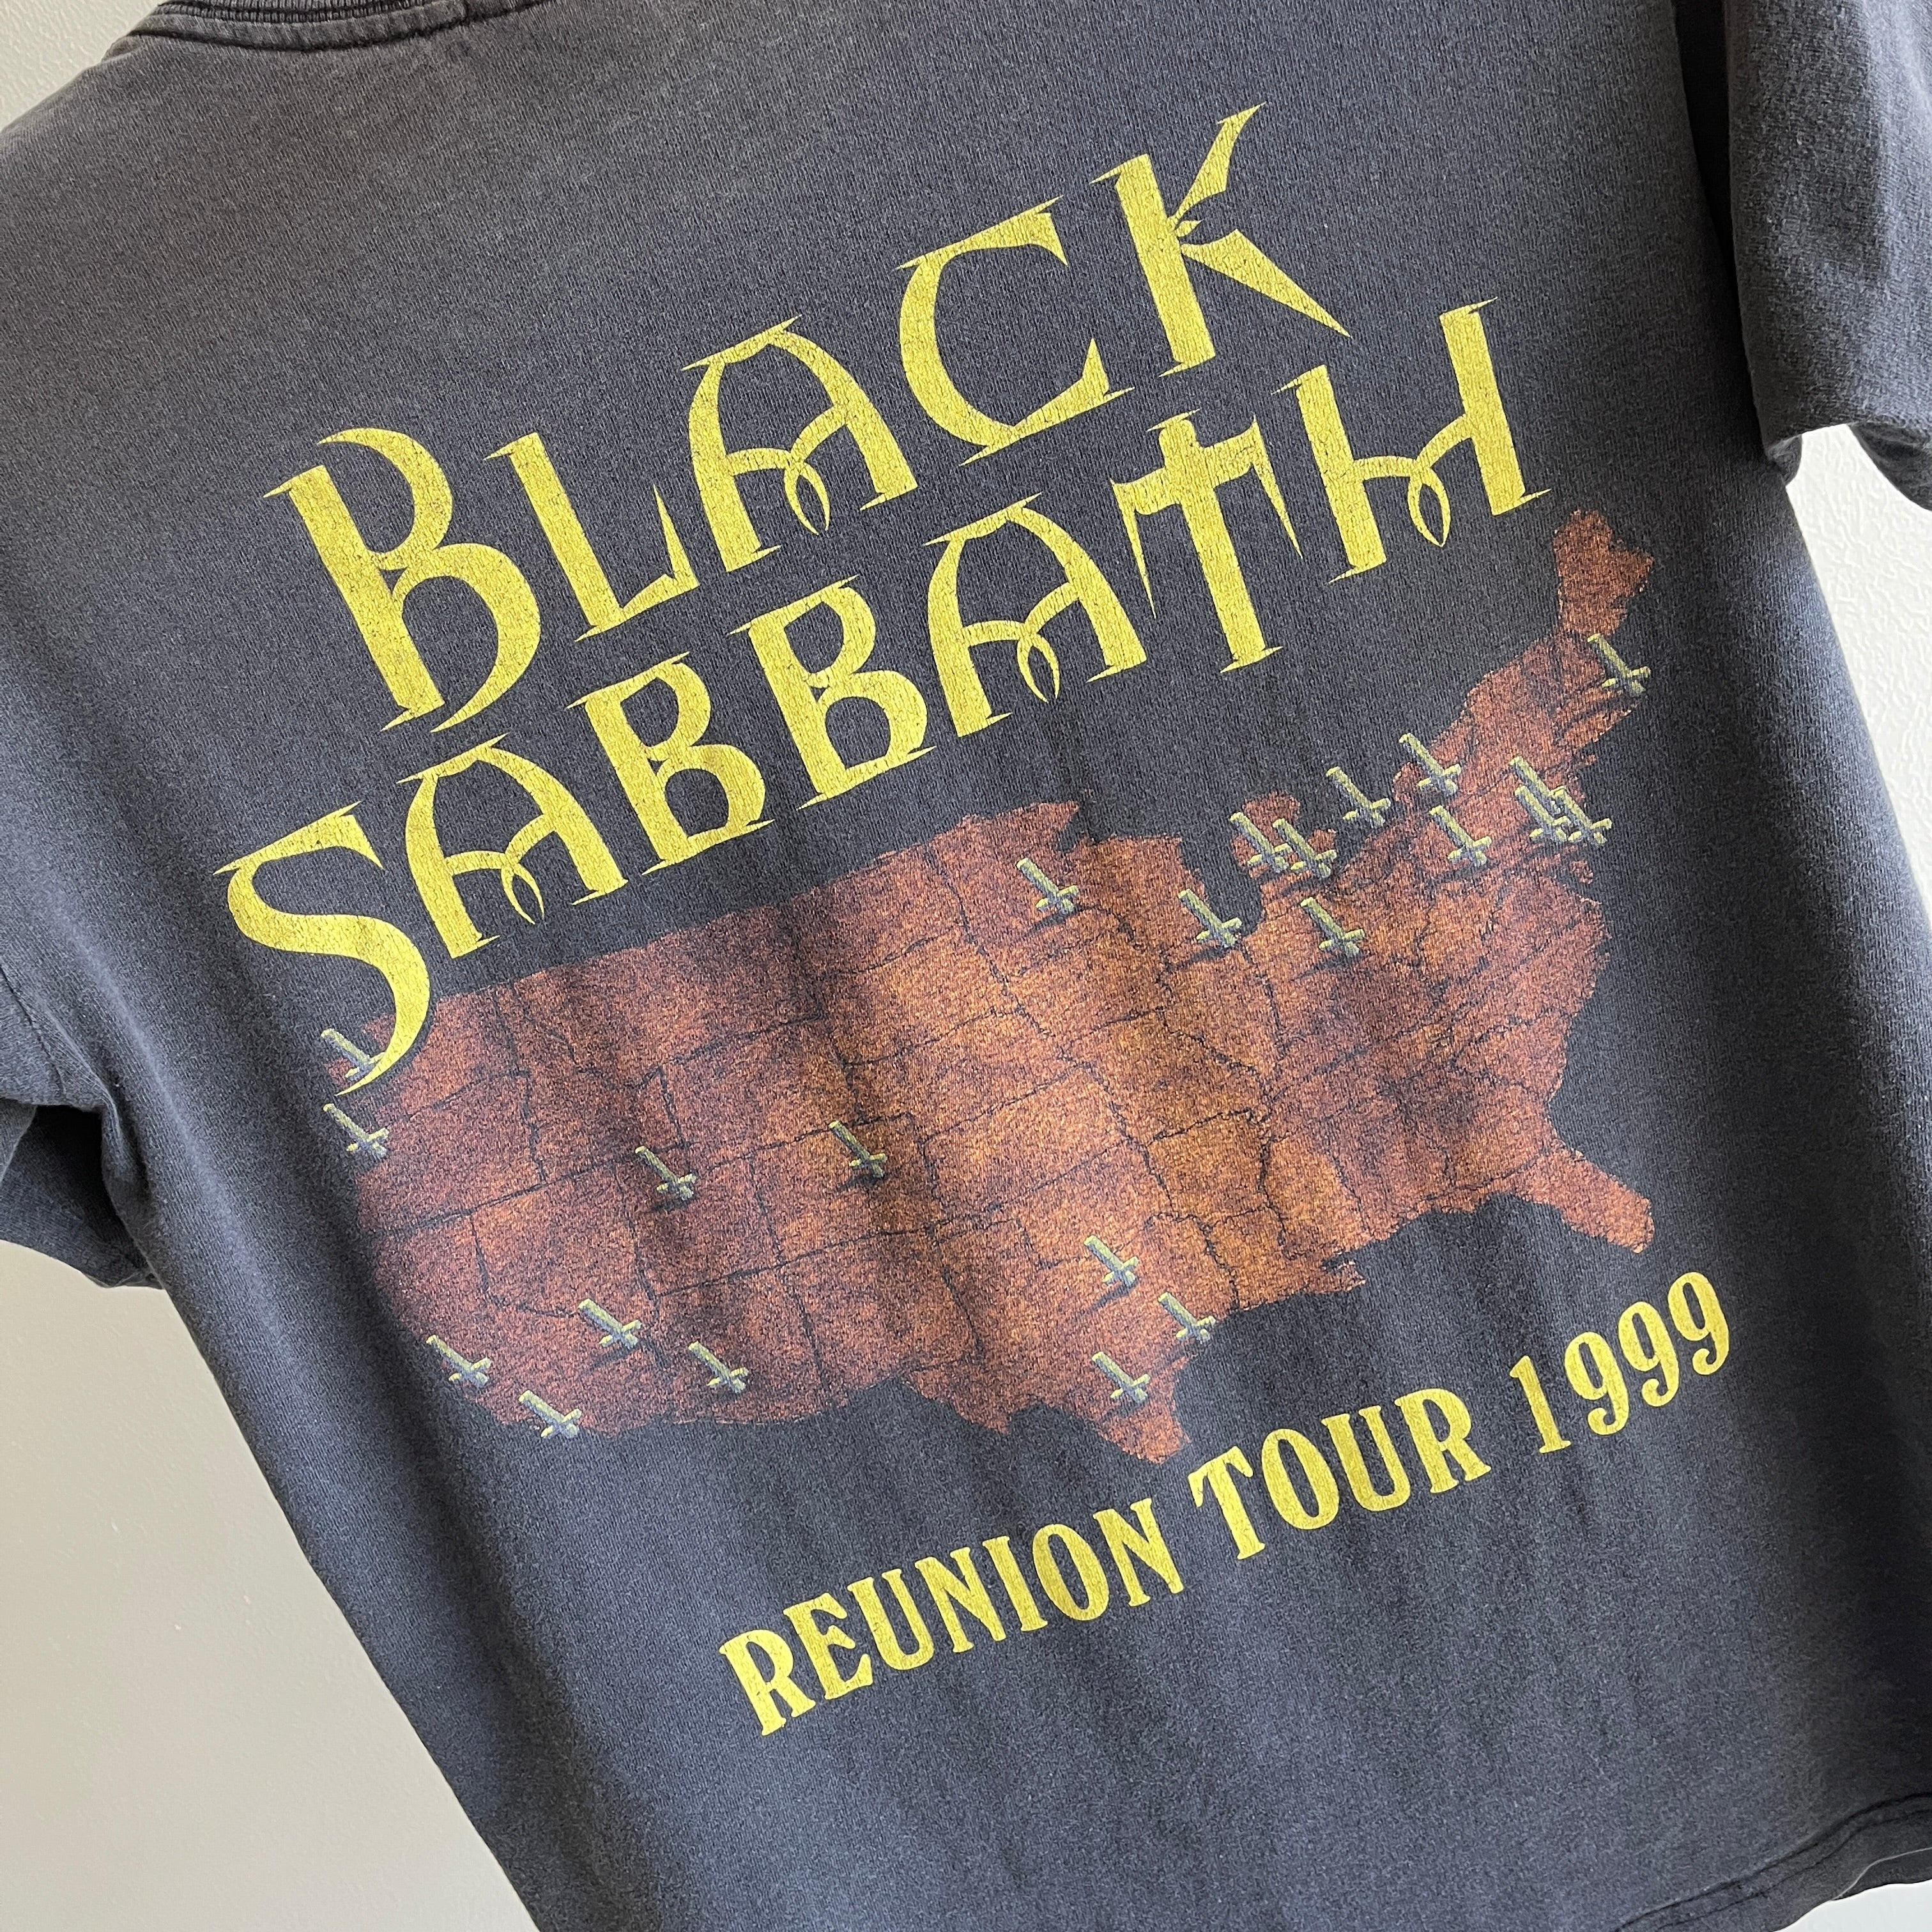 1999 Black Sabbath Reunion Tour T-Shirt